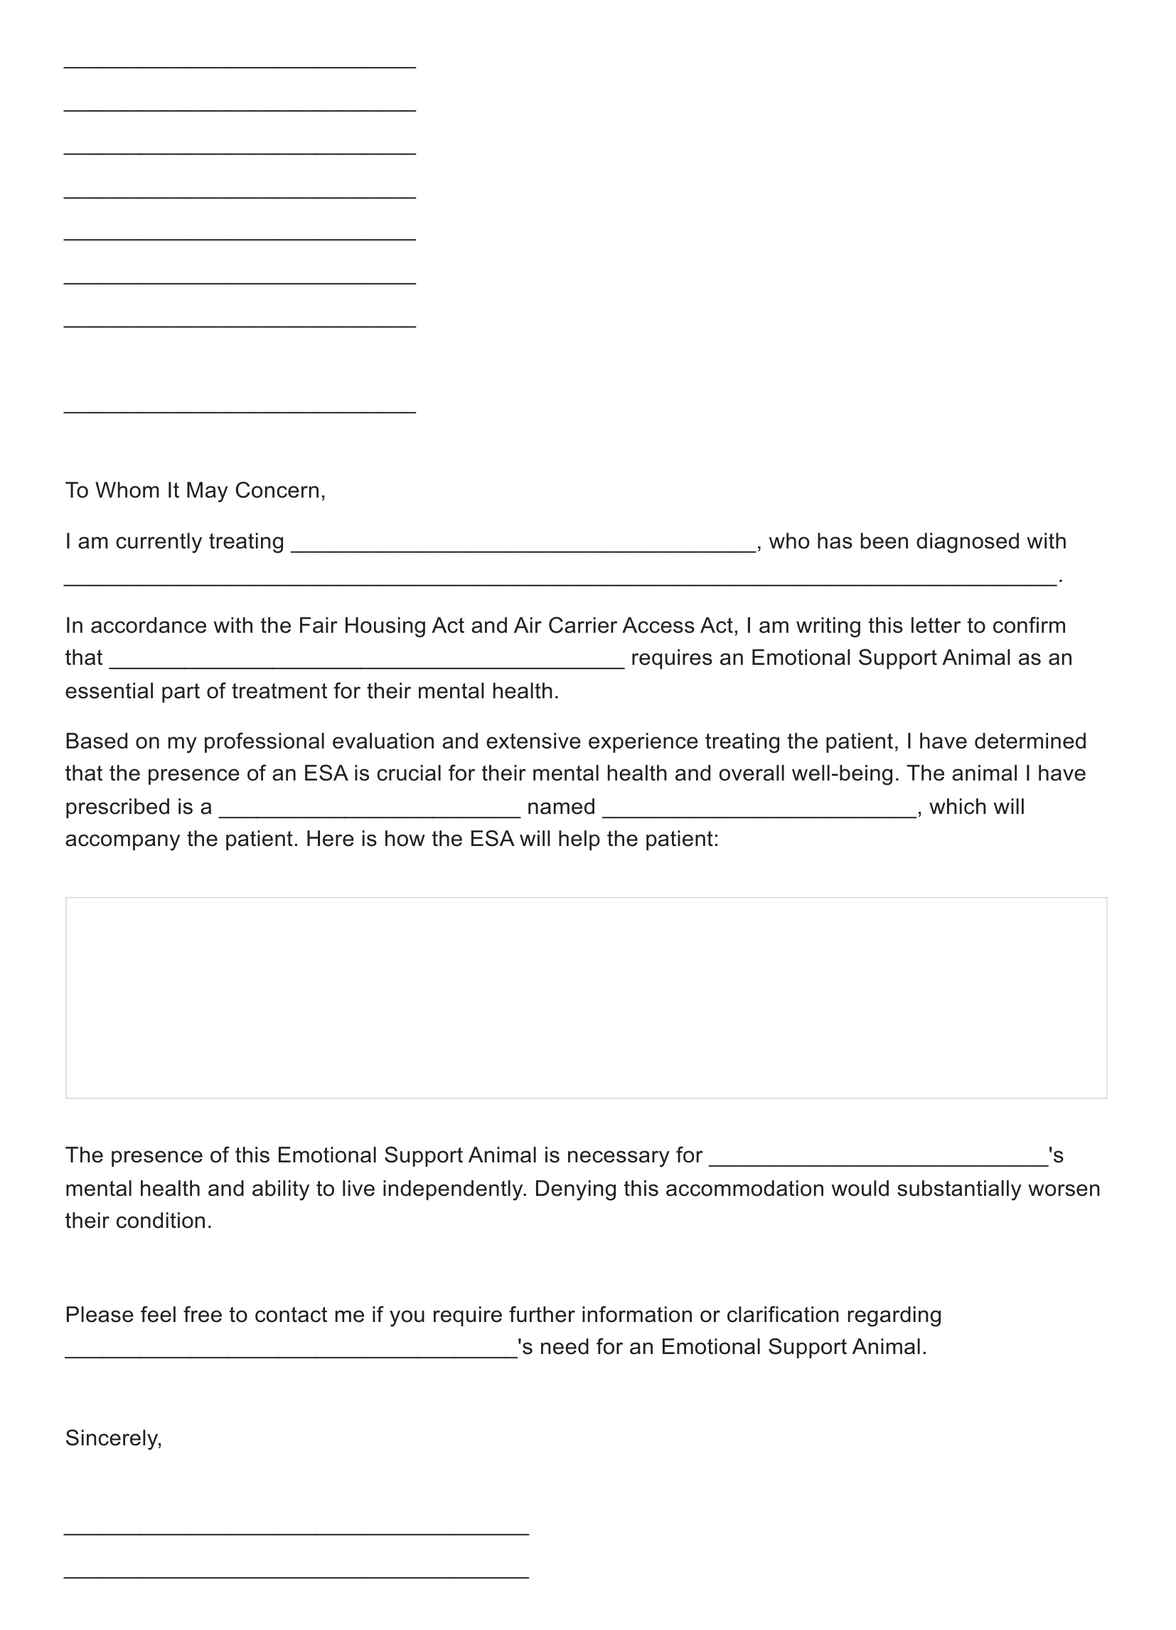 ESA Letter Florida PDF Example